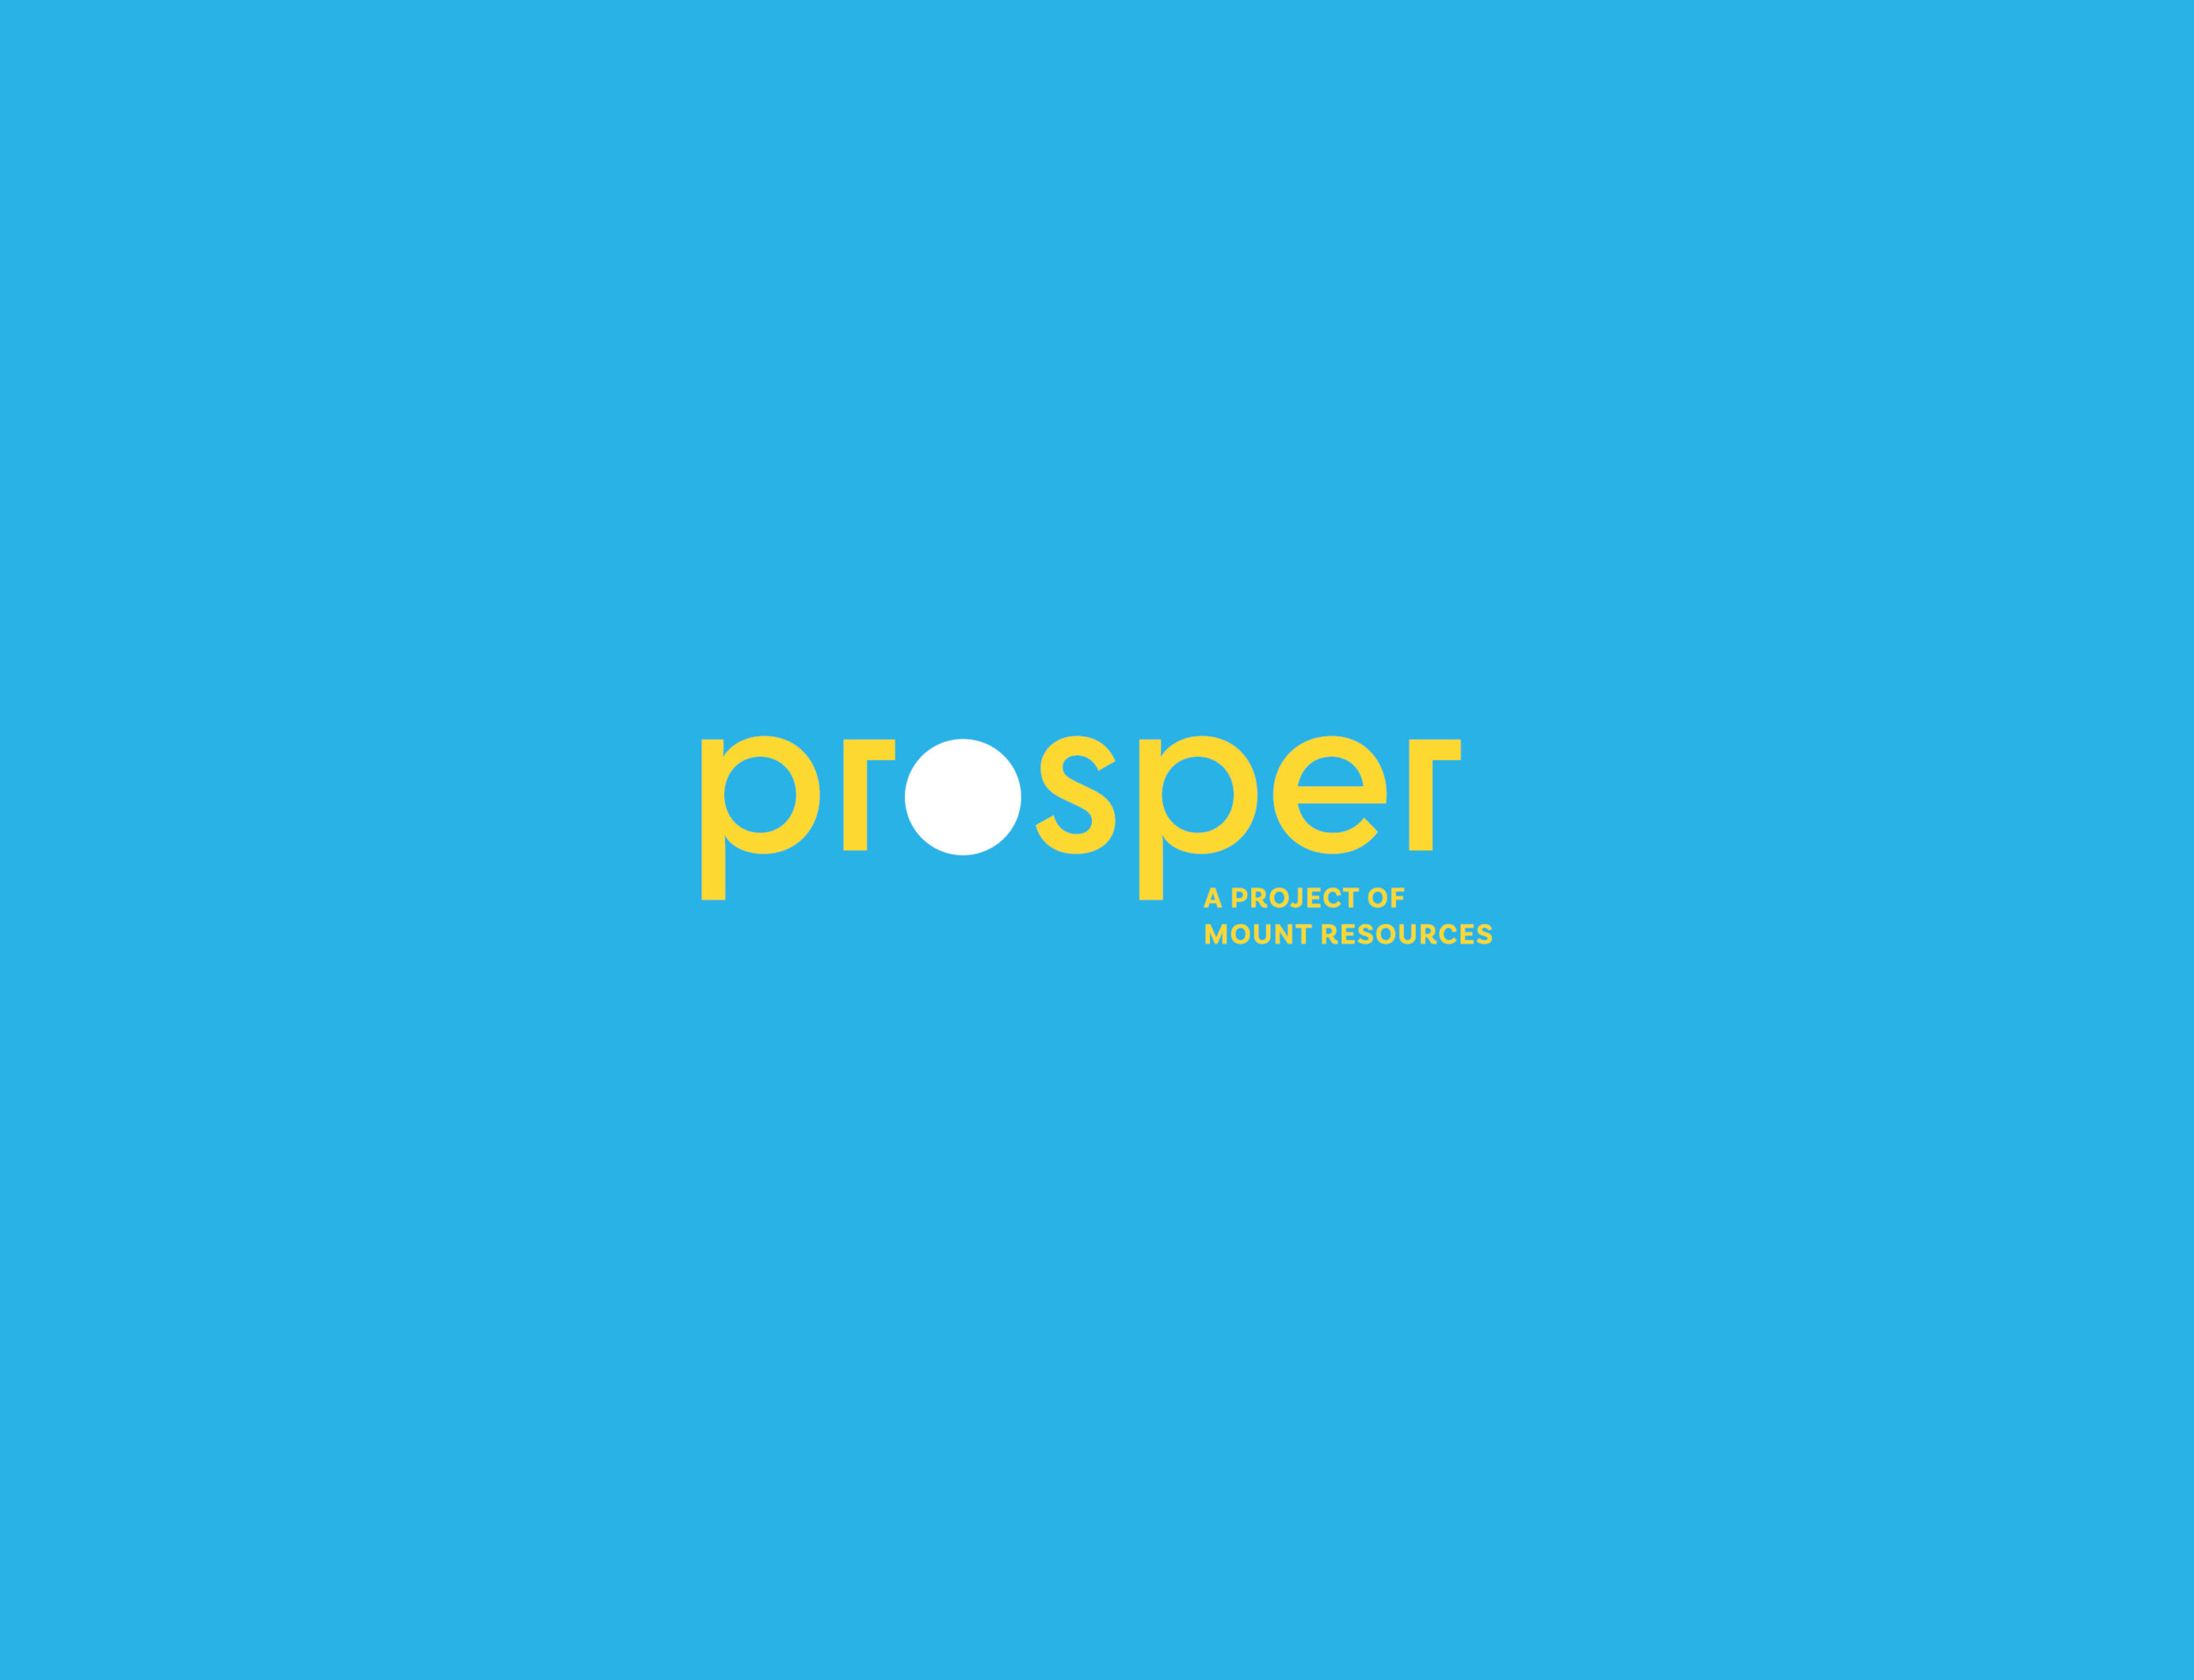 prosper-presentation-20